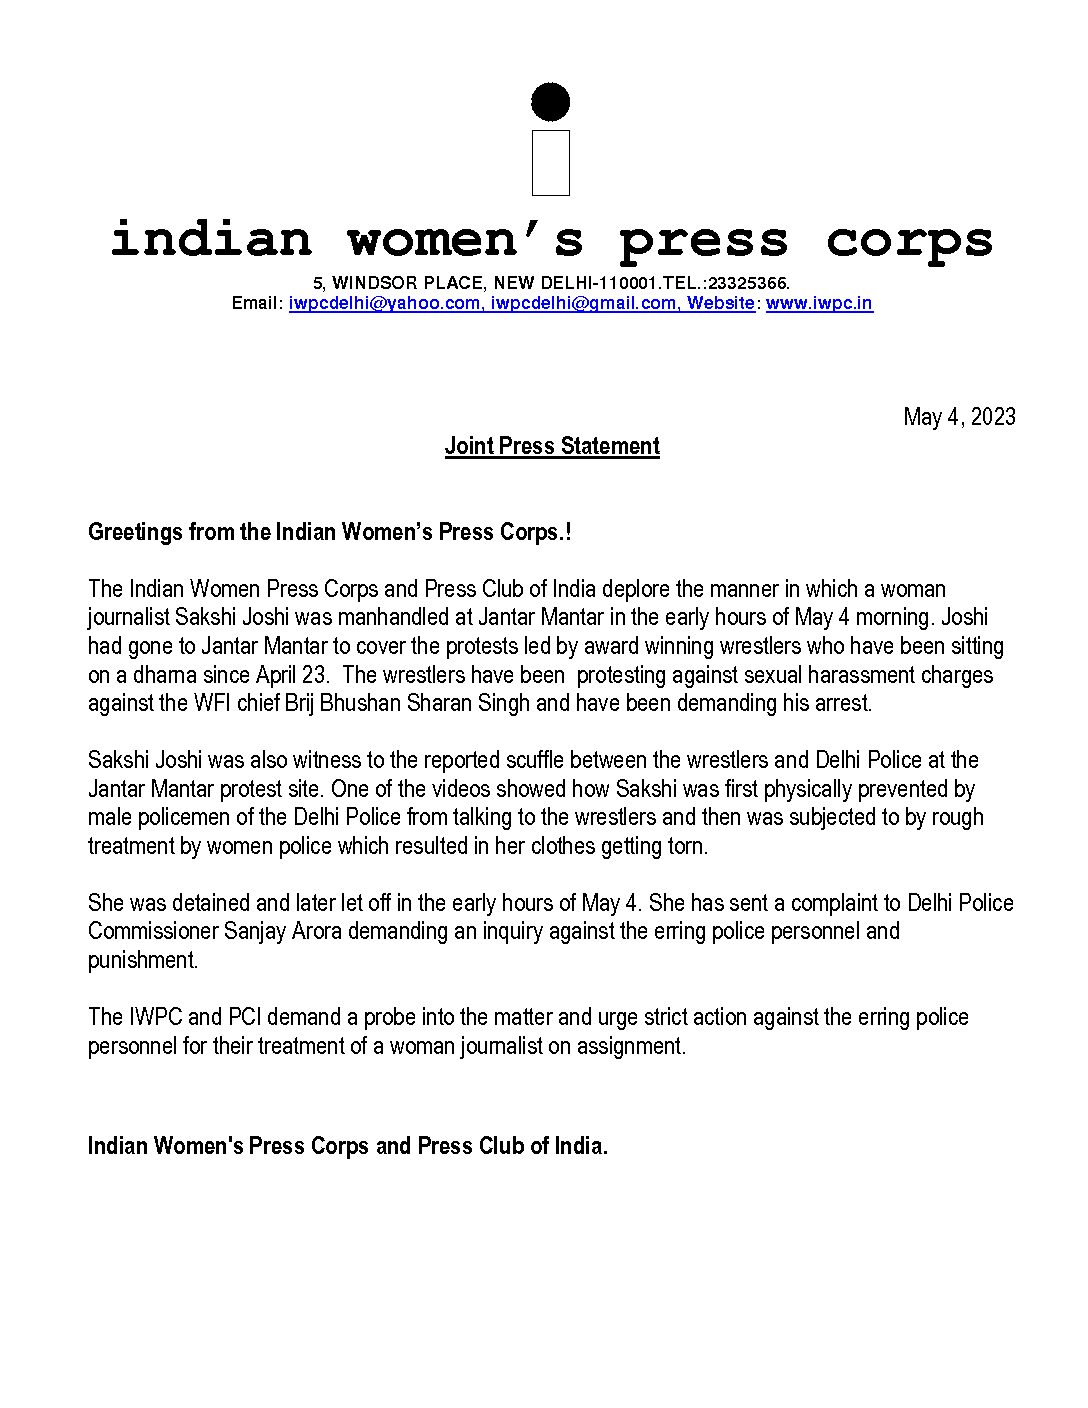 Joint Press Statement- IWPC and PCI deplore manhandling of a woman journalist, demand probe